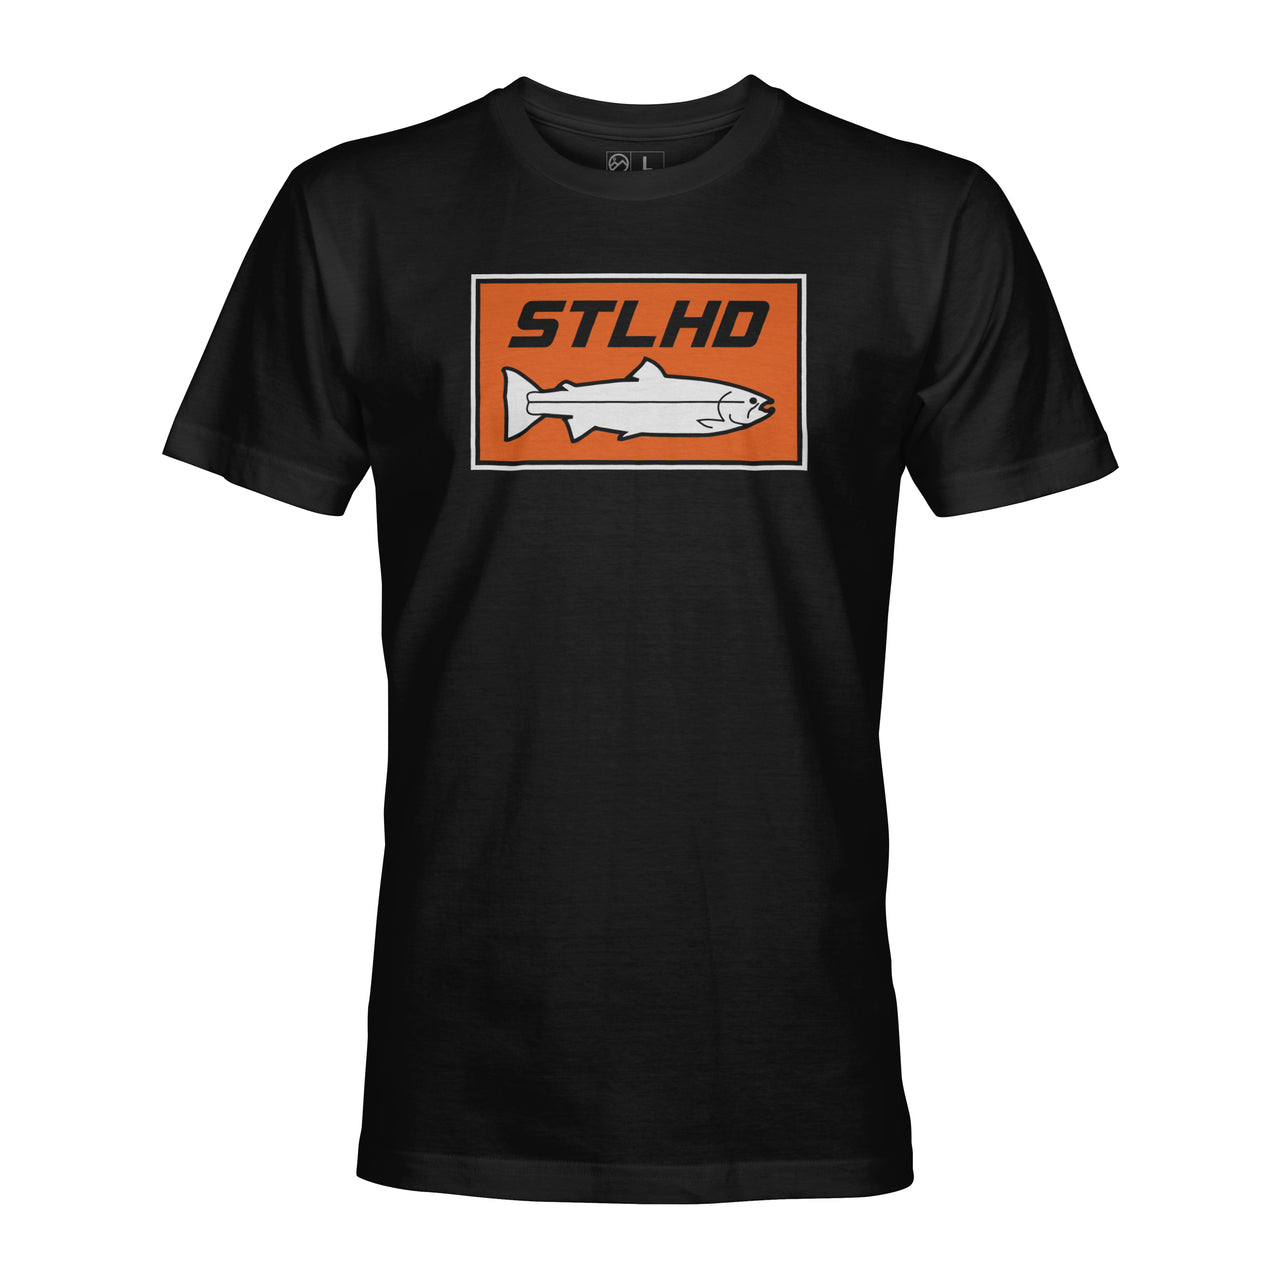 STLHD Men's Standard Logo Black T-Shirt - H&H Outfitters